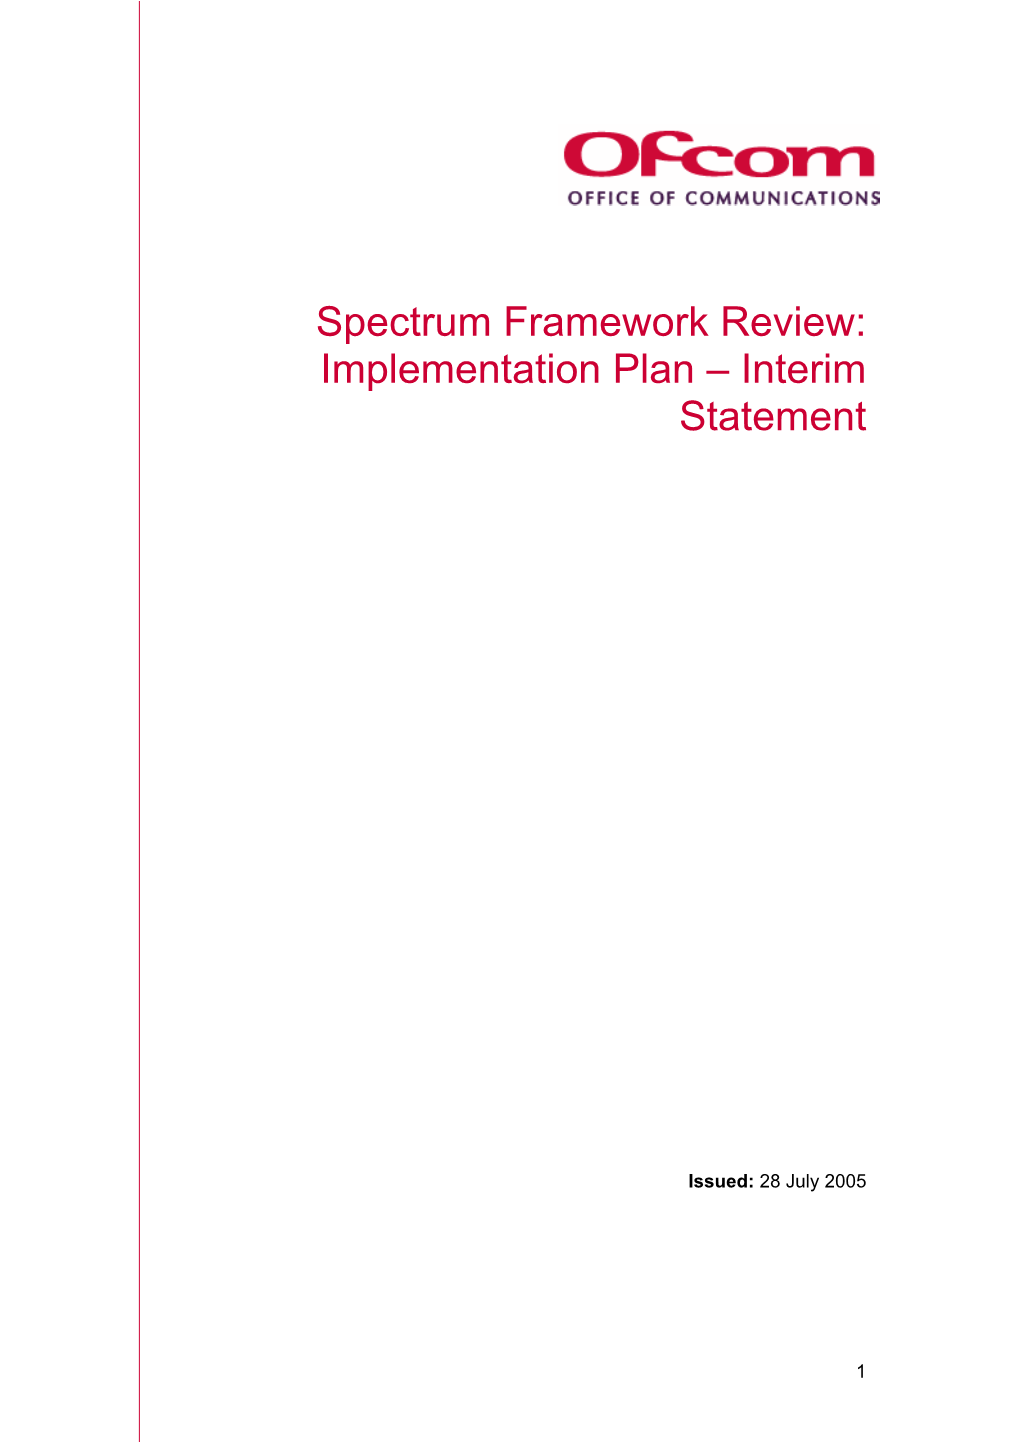 Statement: Spectrum Framework Review